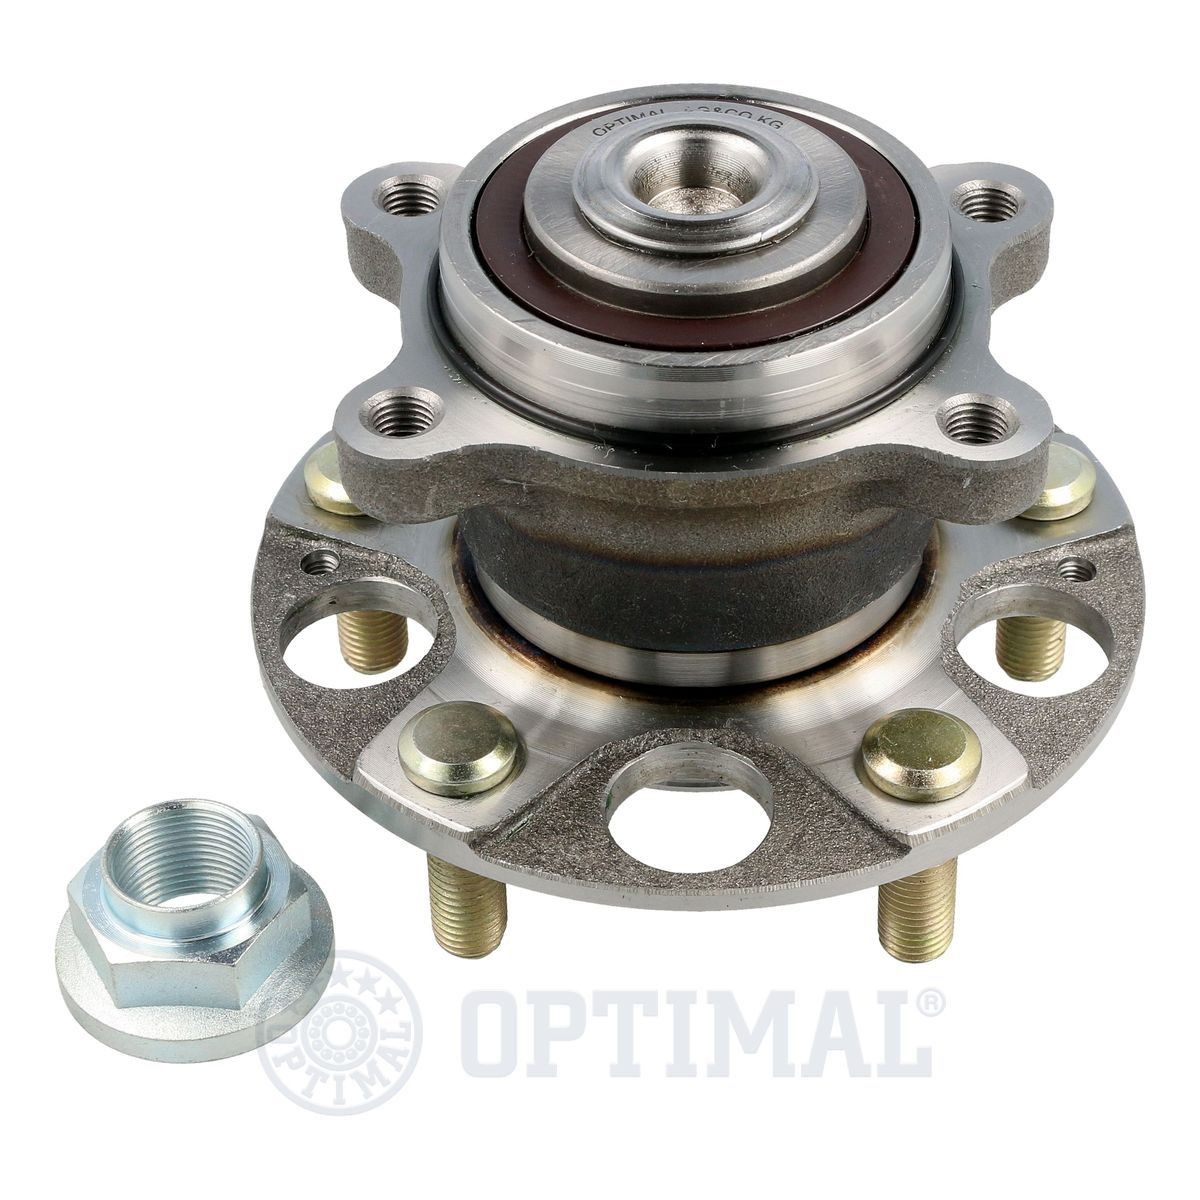 OPTIMAL 912358 Wheel bearing kit with integrated magnetic sensor ring, 139, 74 mm